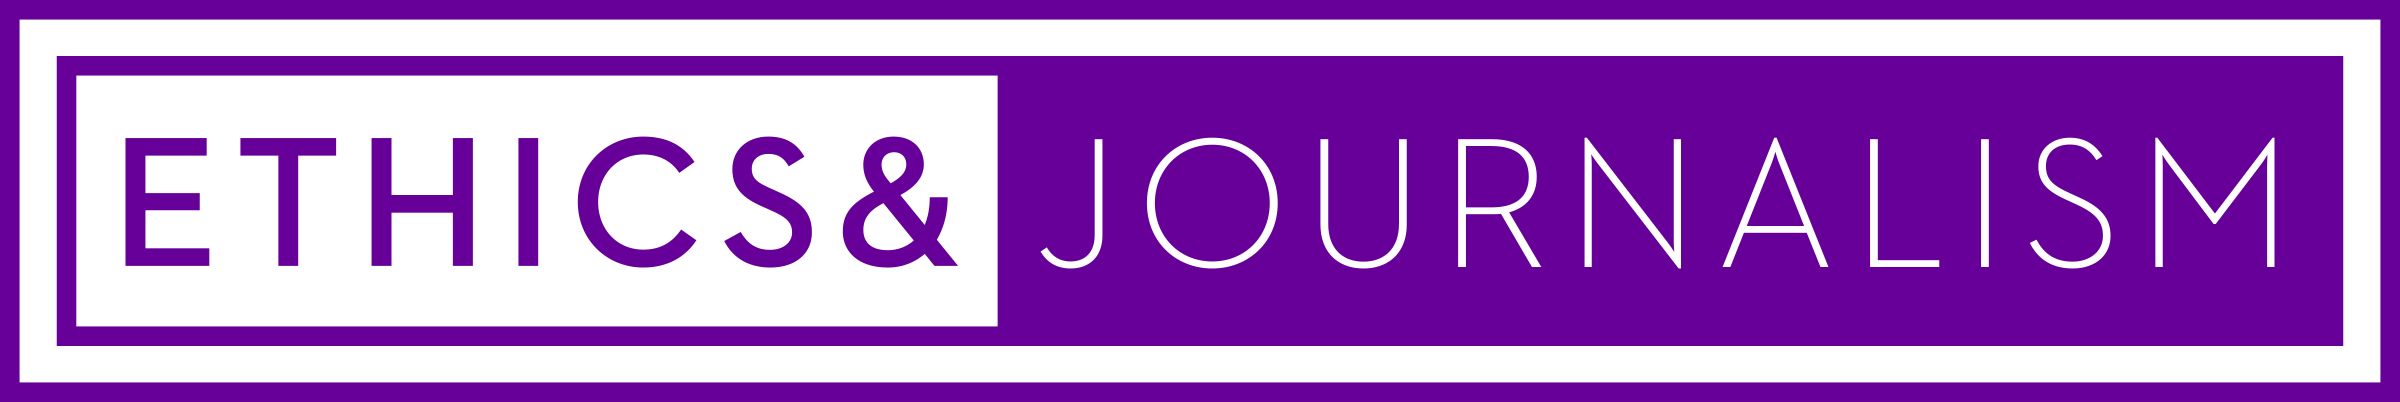 Ethics and Journalism Logo